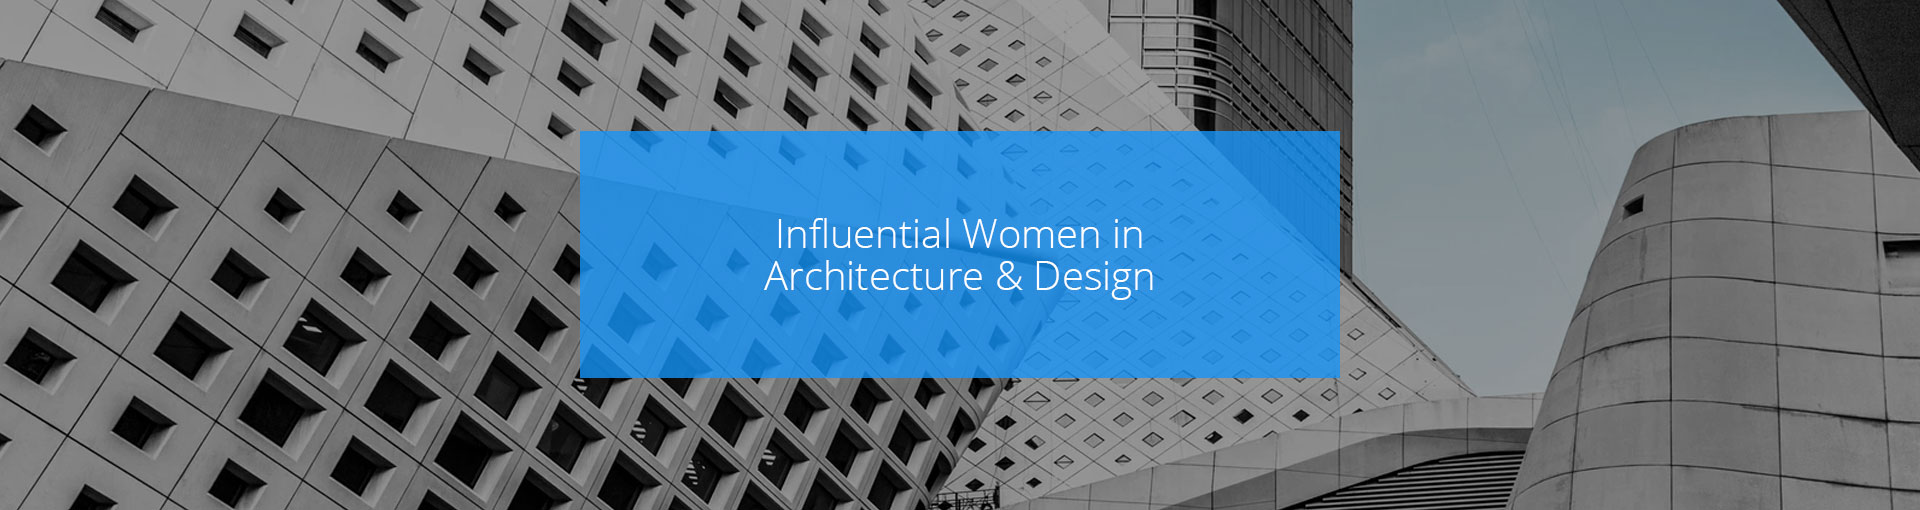 Influential Women in Architecture & Design